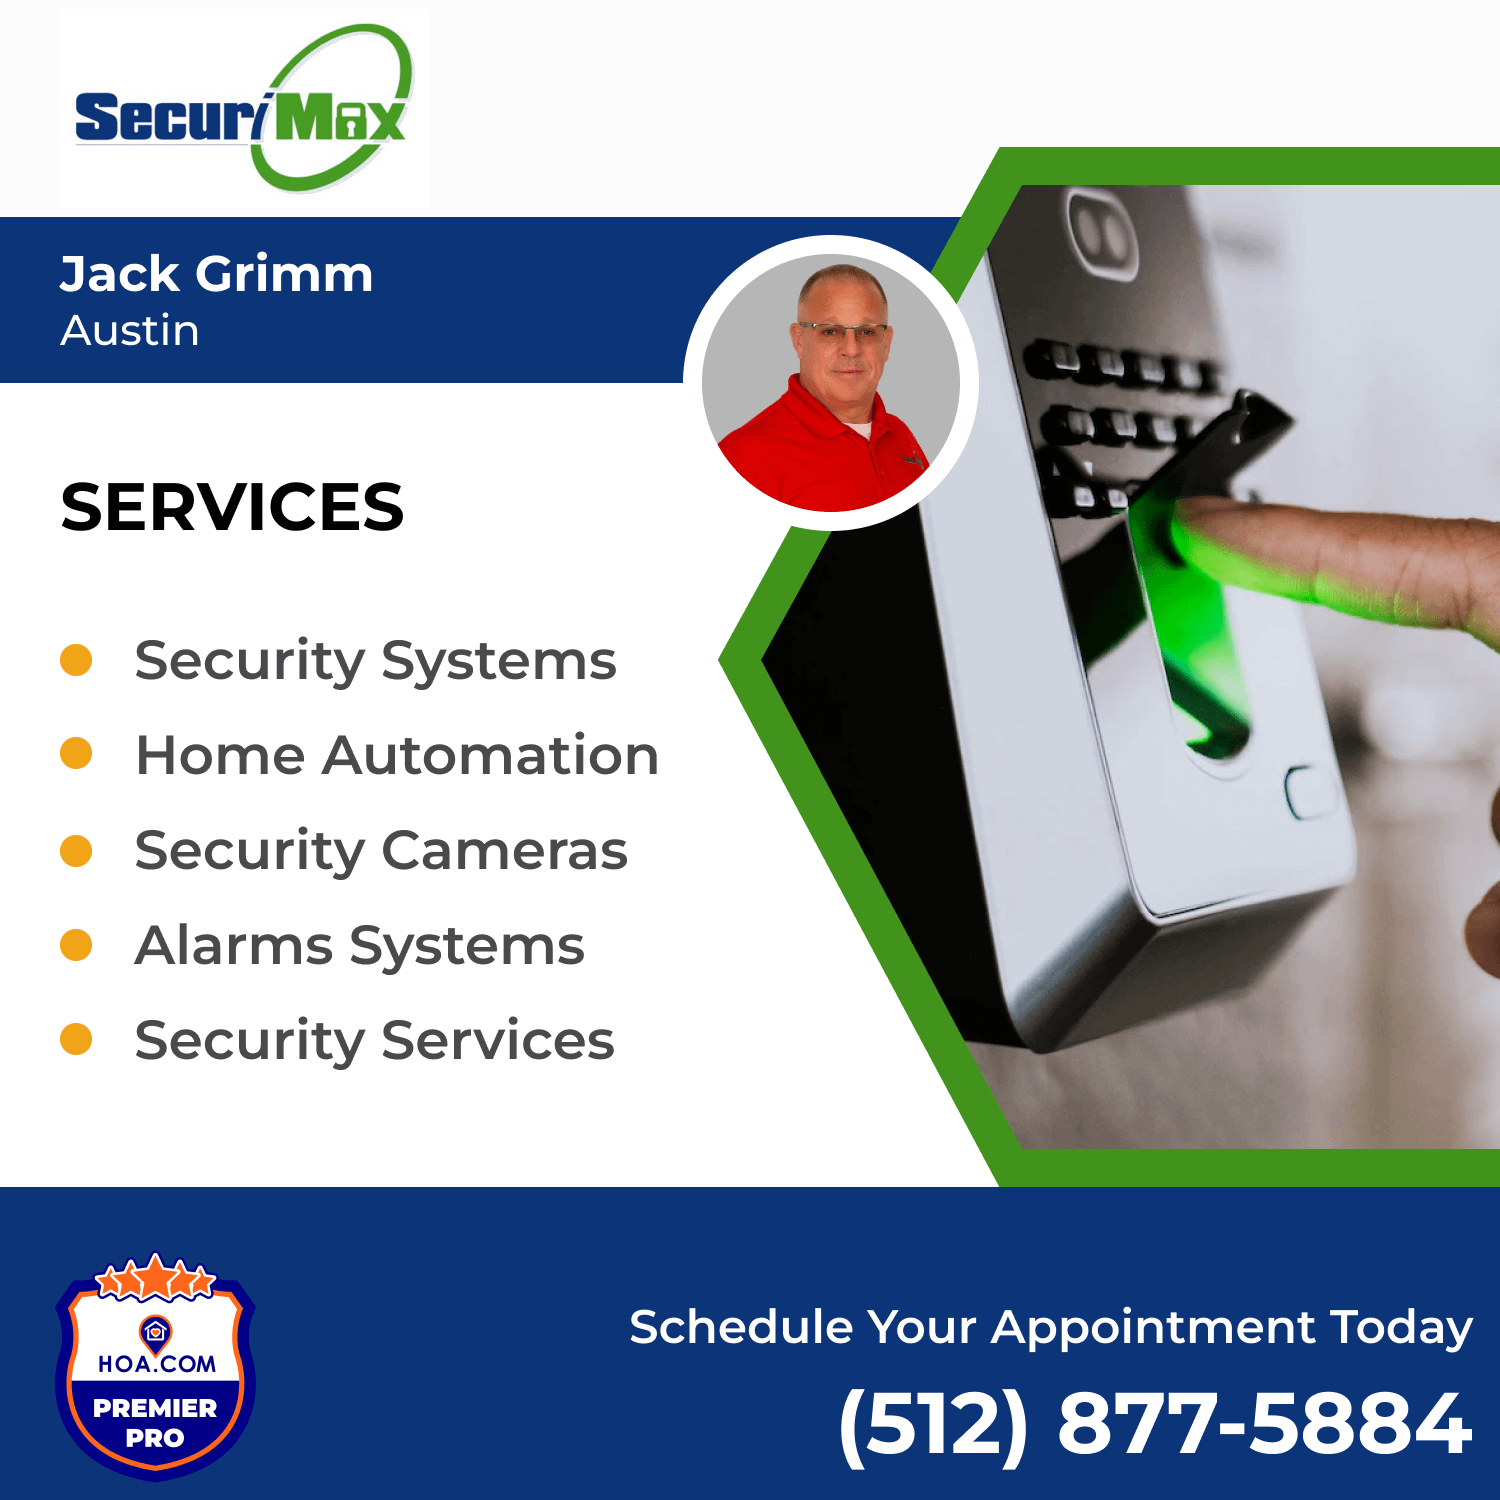 SecuriMax Services